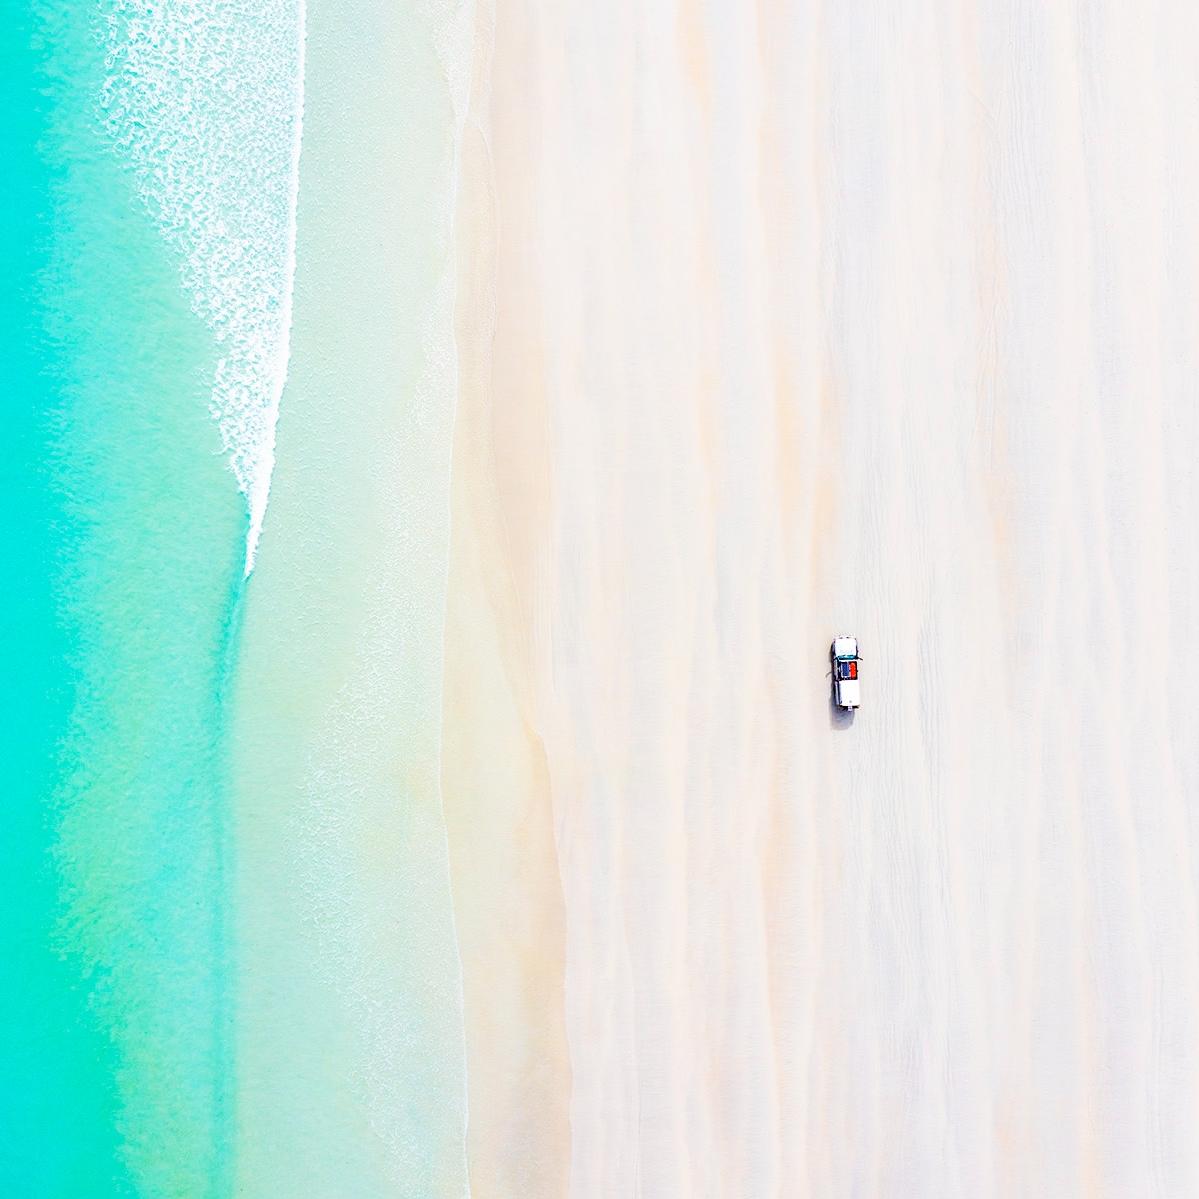 Cable beach Broome in Western Australia